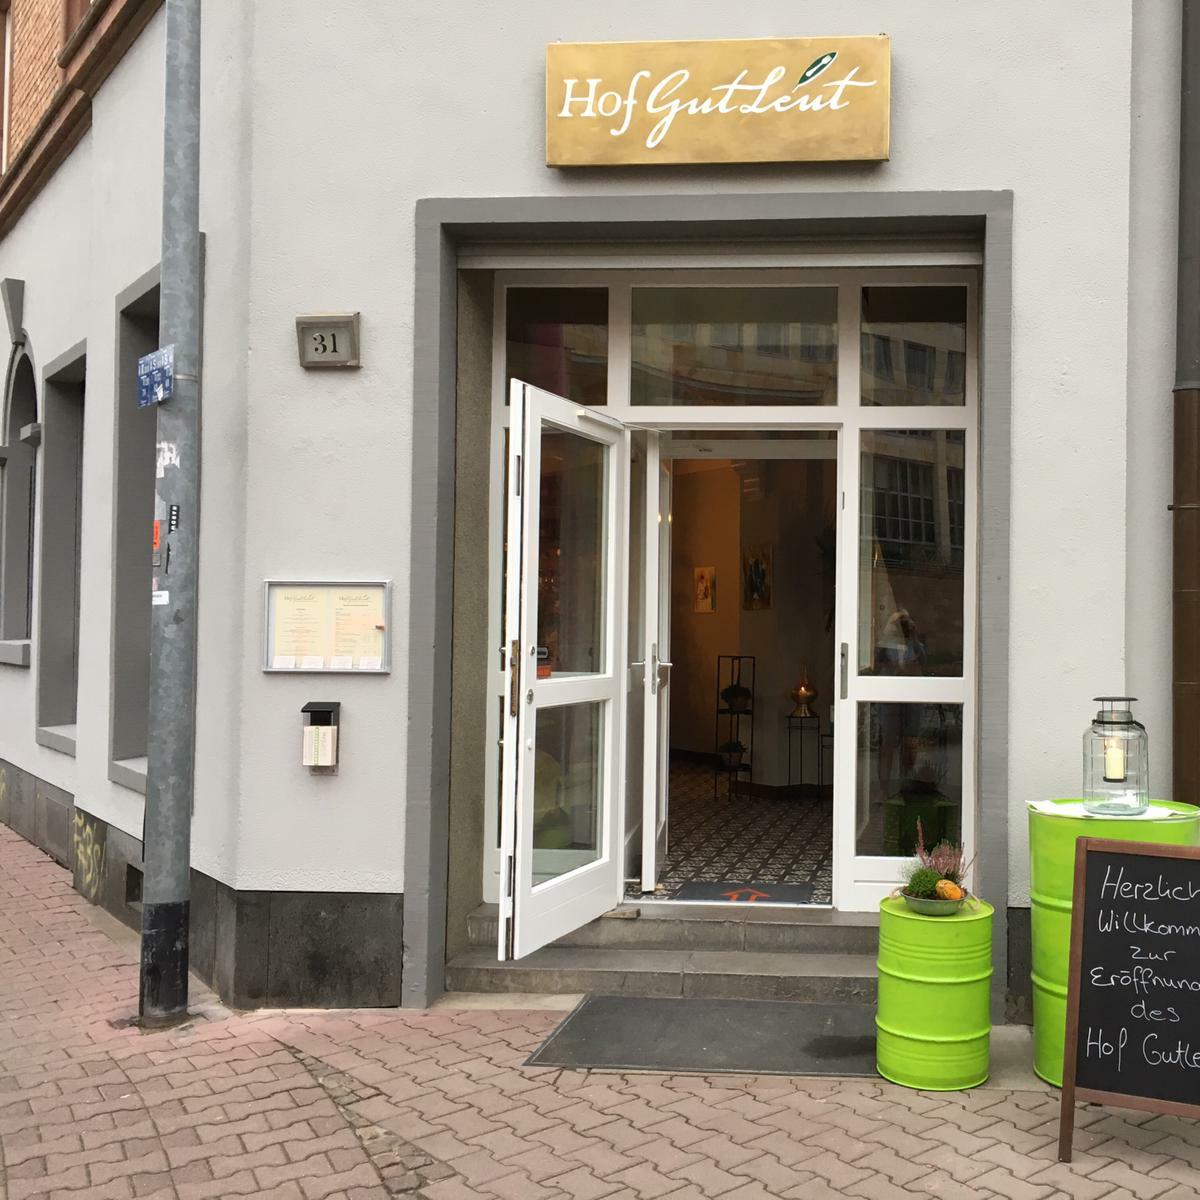 Restaurant "Hof GutLeut" in Frankfurt am Main